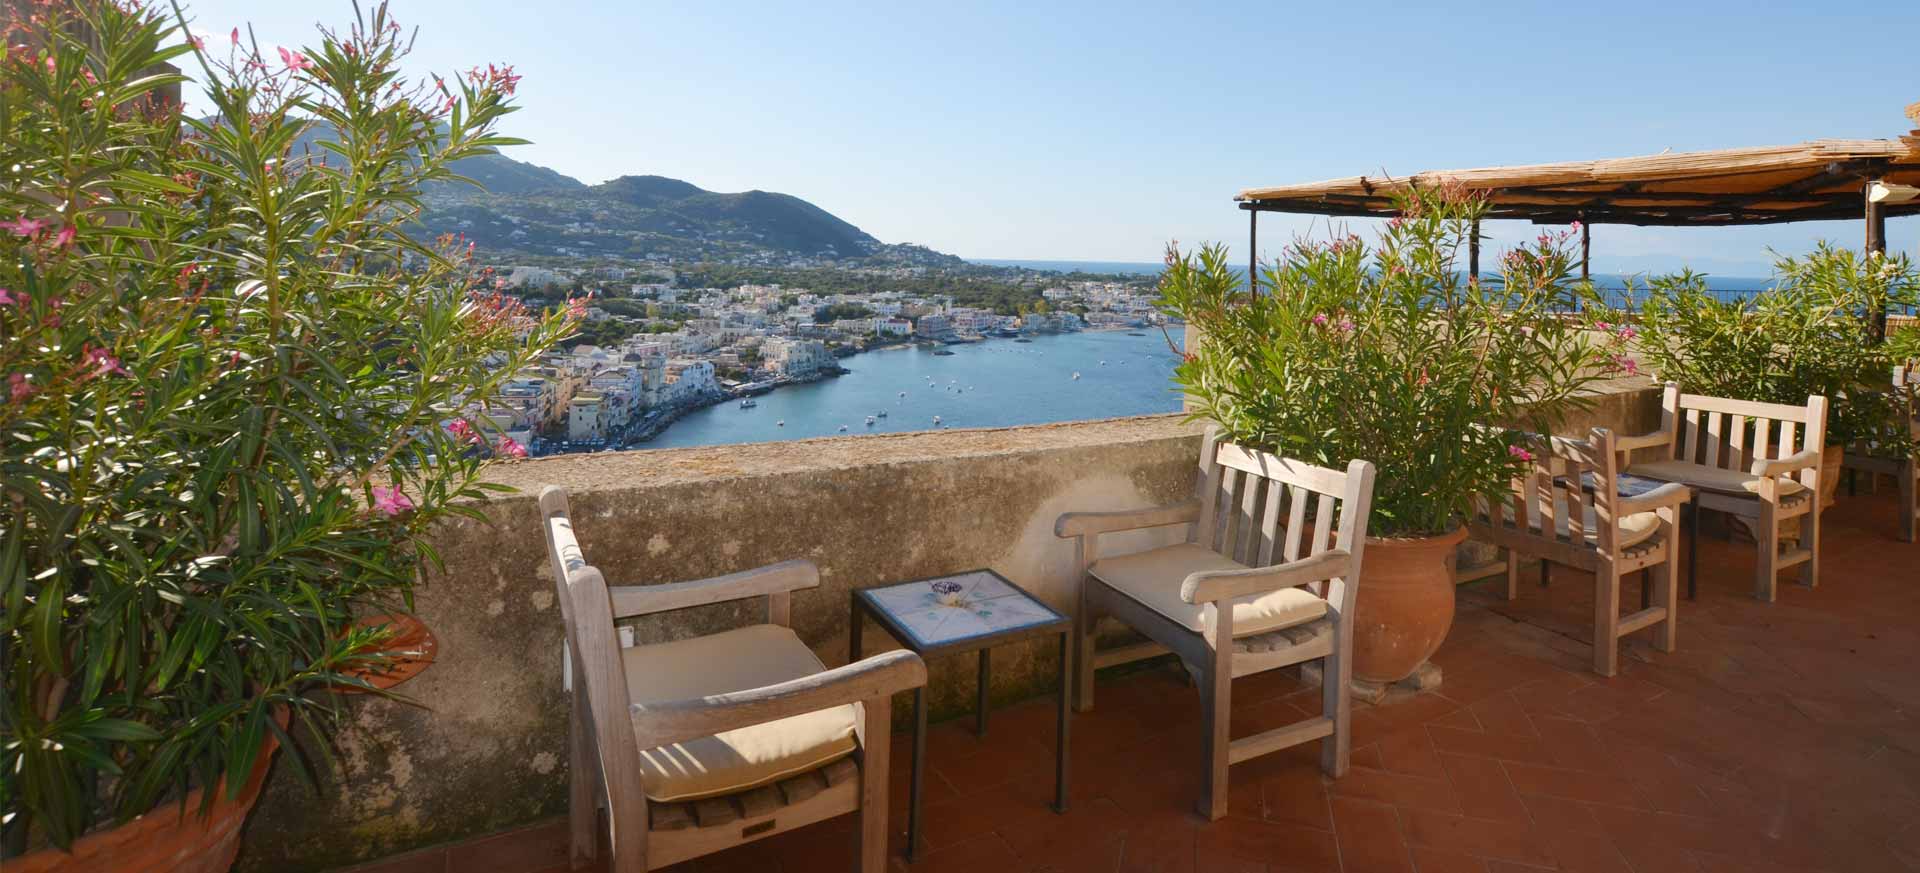 Charming hotel Ischia